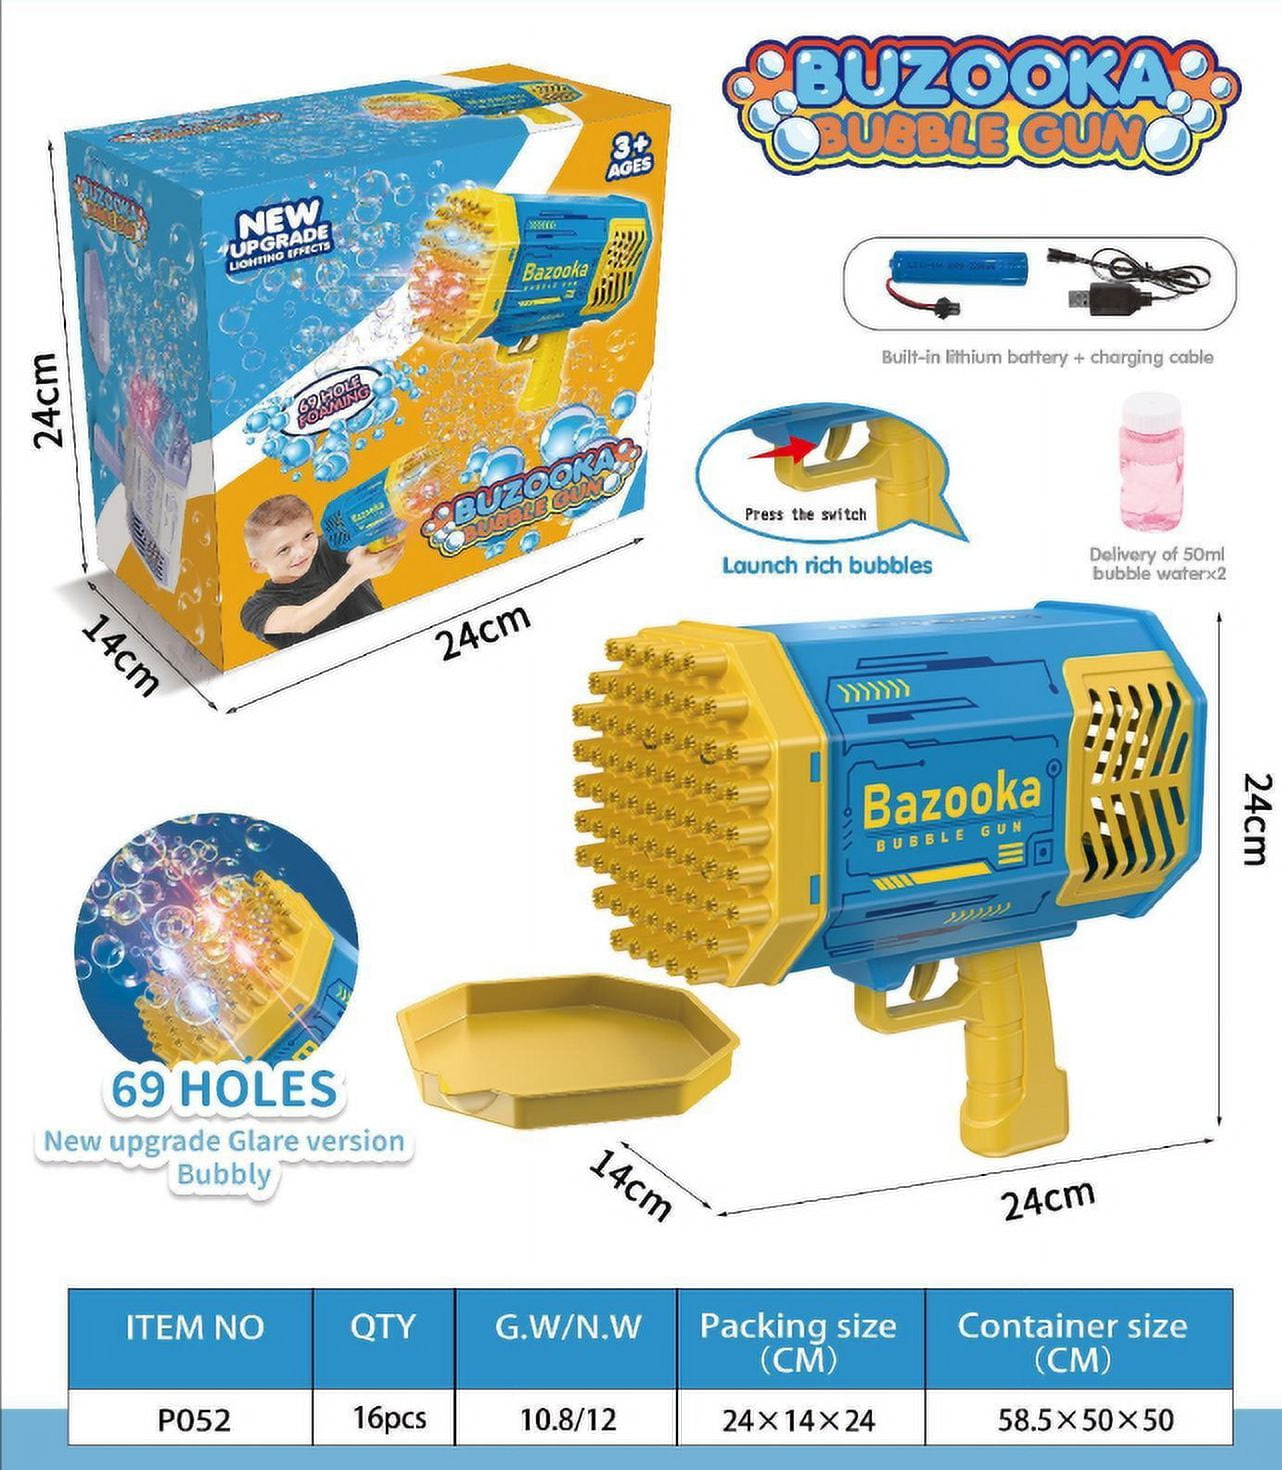 Electric Automatic Bubble Maker Gun-Magic Bubble Blower - Toy Company